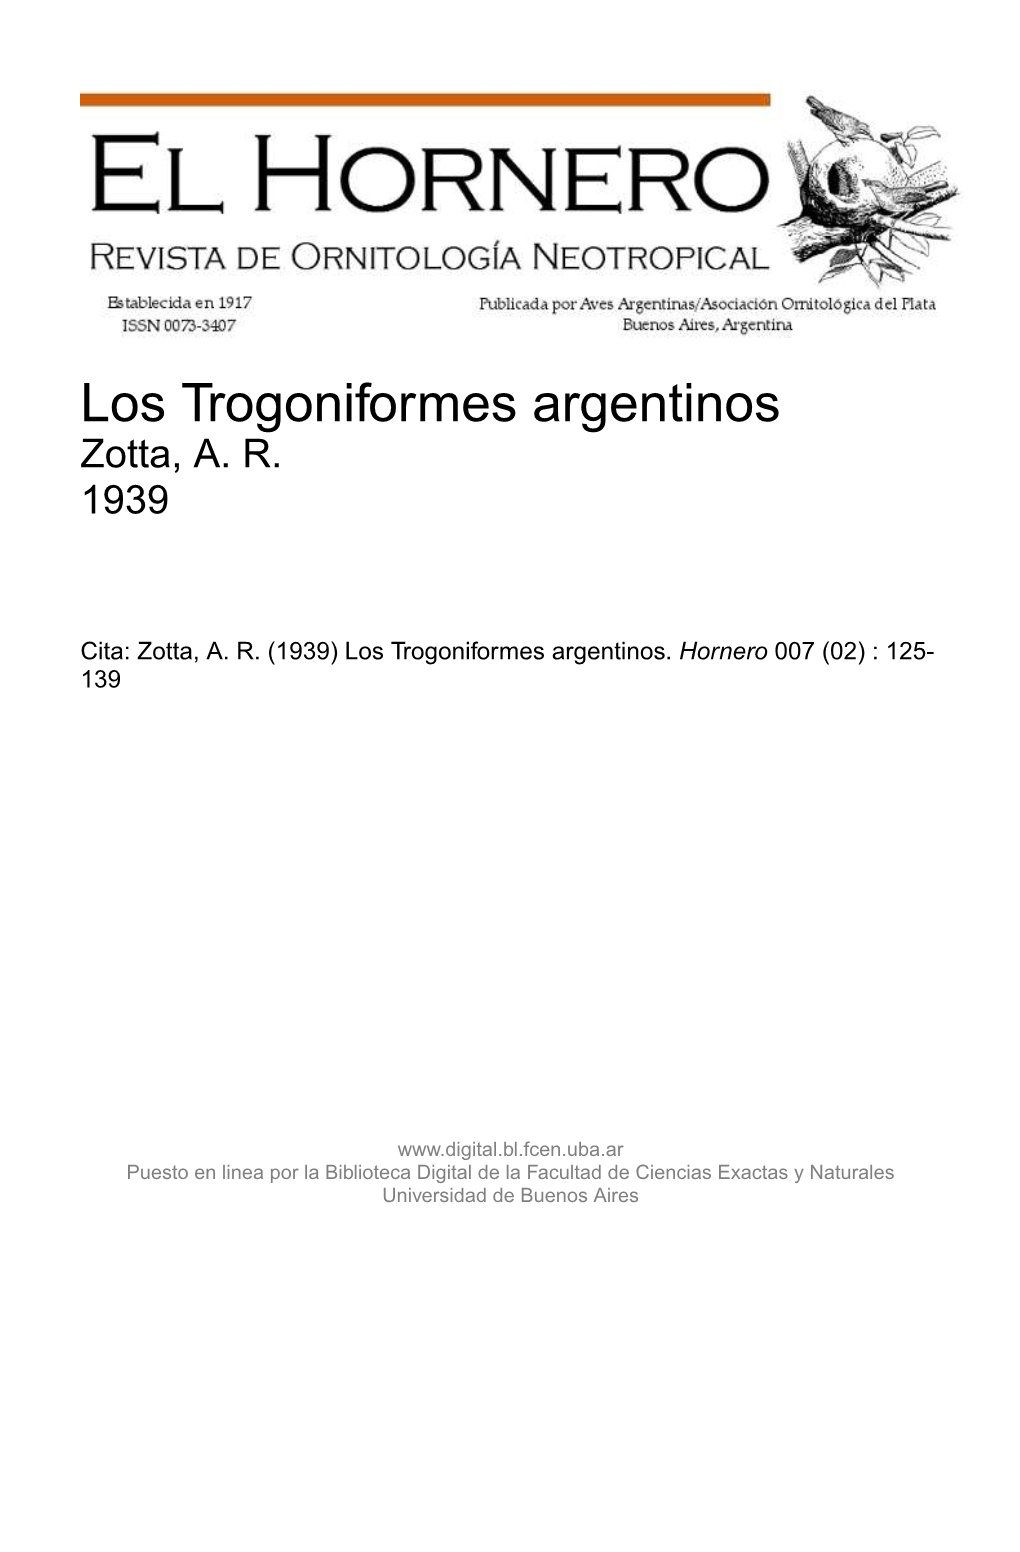 Los Trogoniformes Argentinos Zotta, A